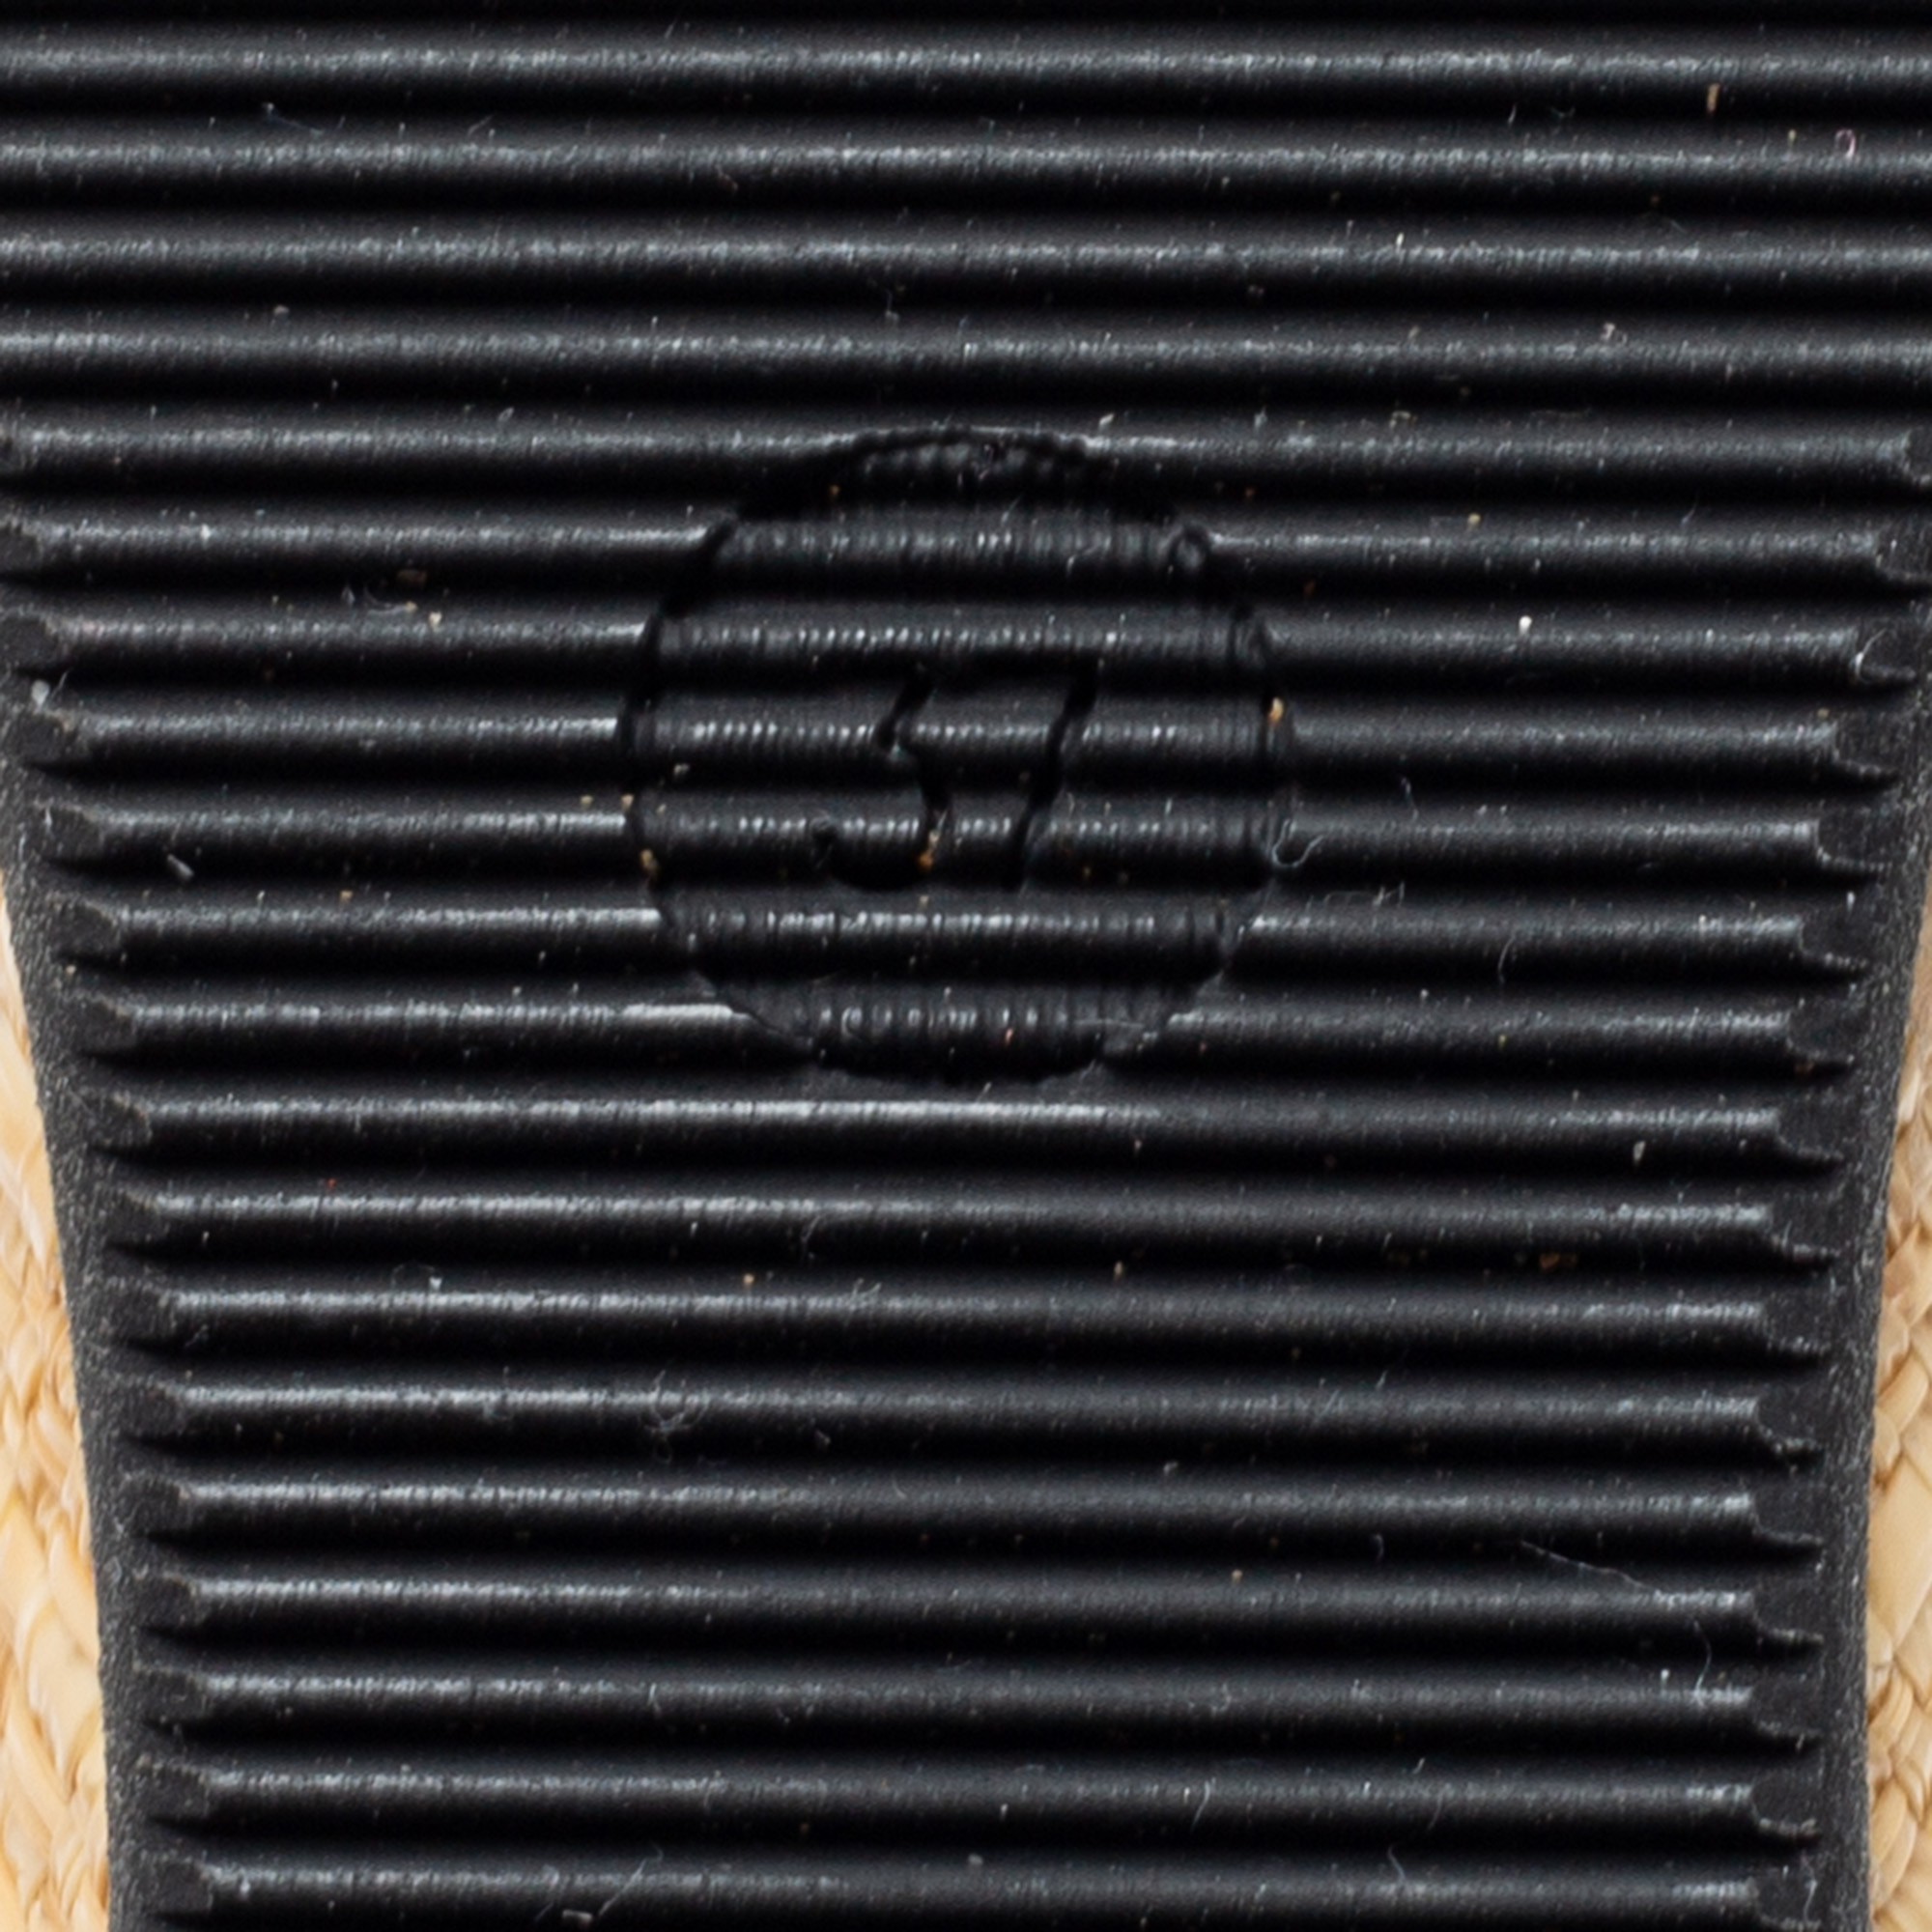 Fendi Black Patent Leather Platform Wedge Heel Slingback Sandals Size 37